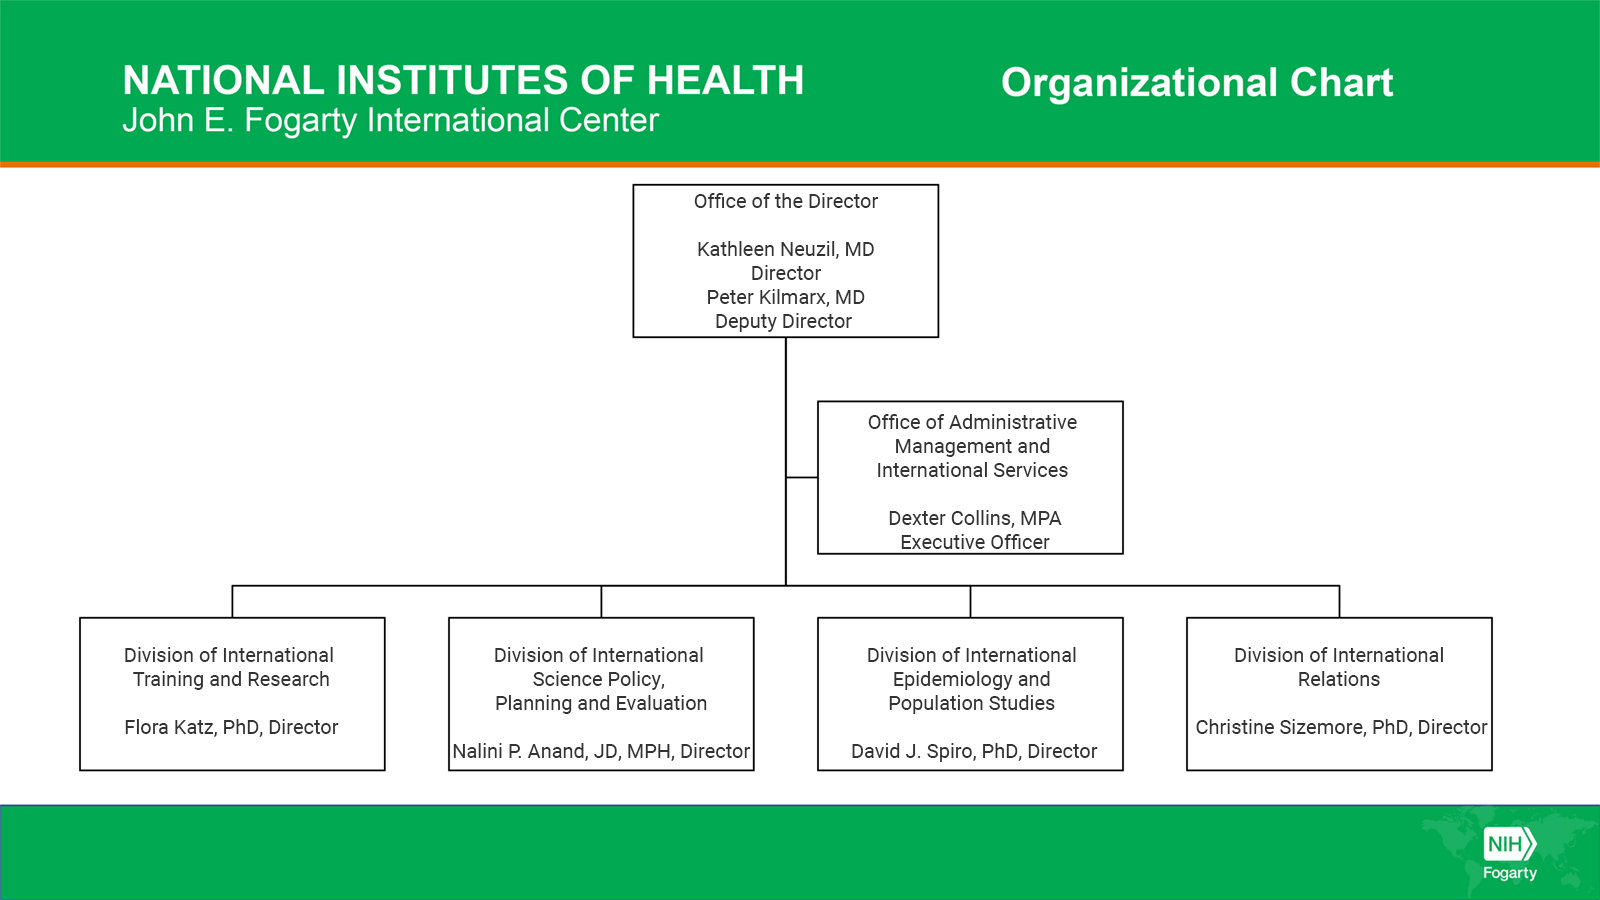 organization-chart-fogarty-international-center-nih